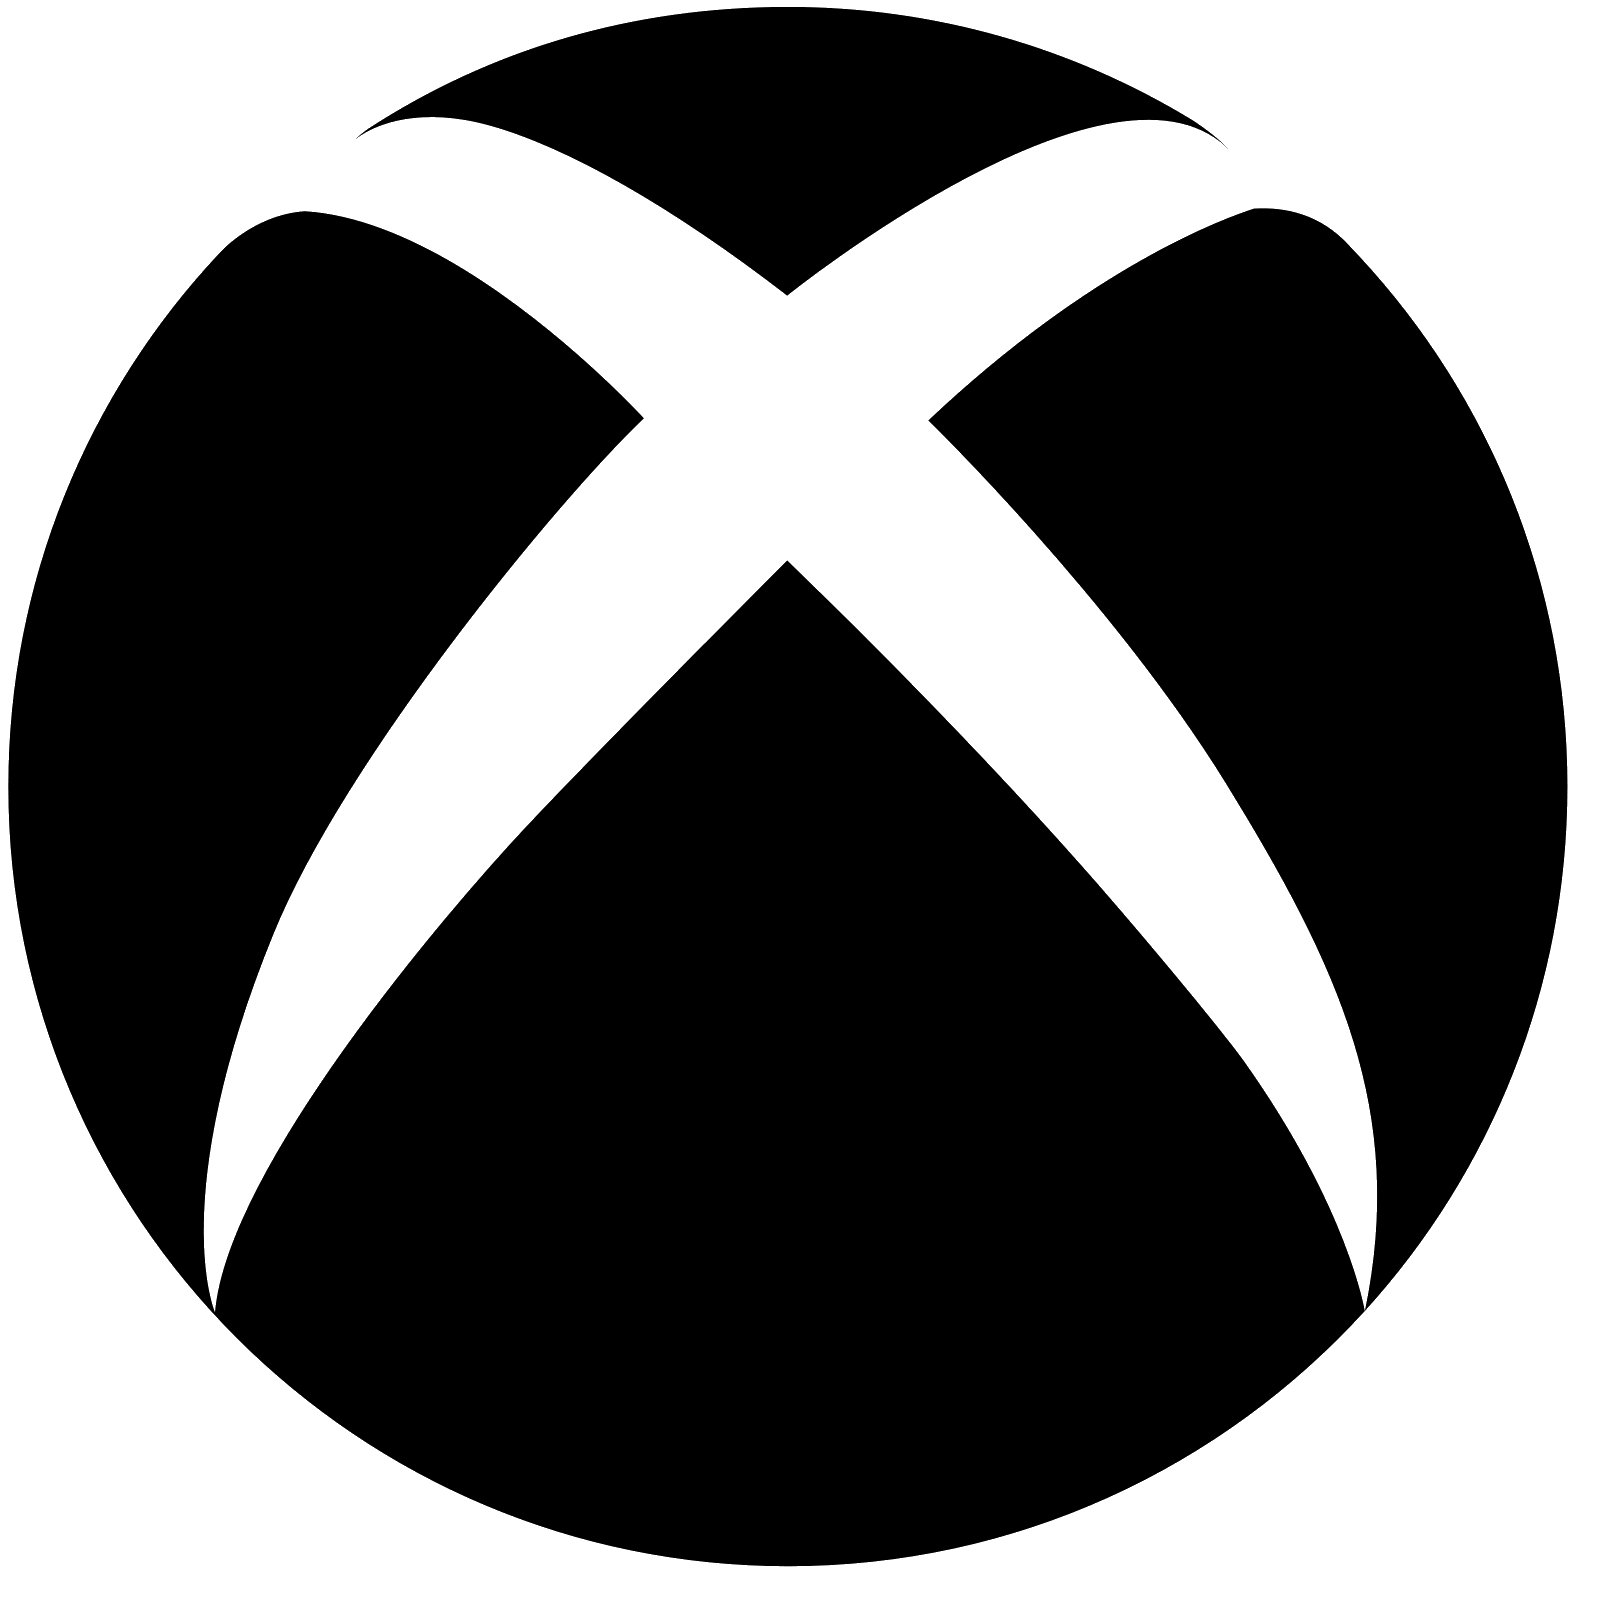 Xbox logotipo PNG pic